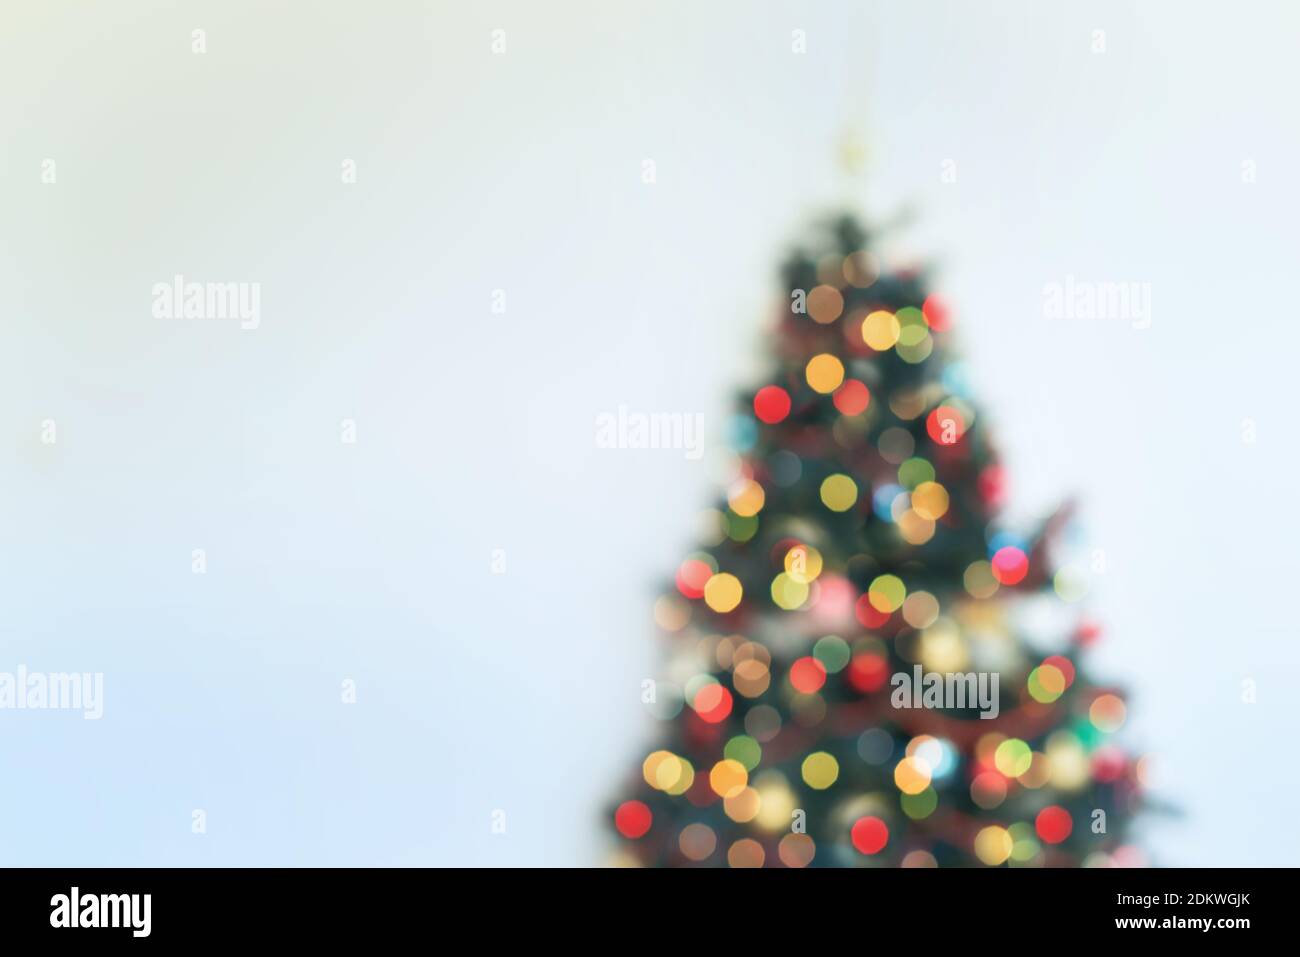 Defocused Christmas tree with lights Stock Photo